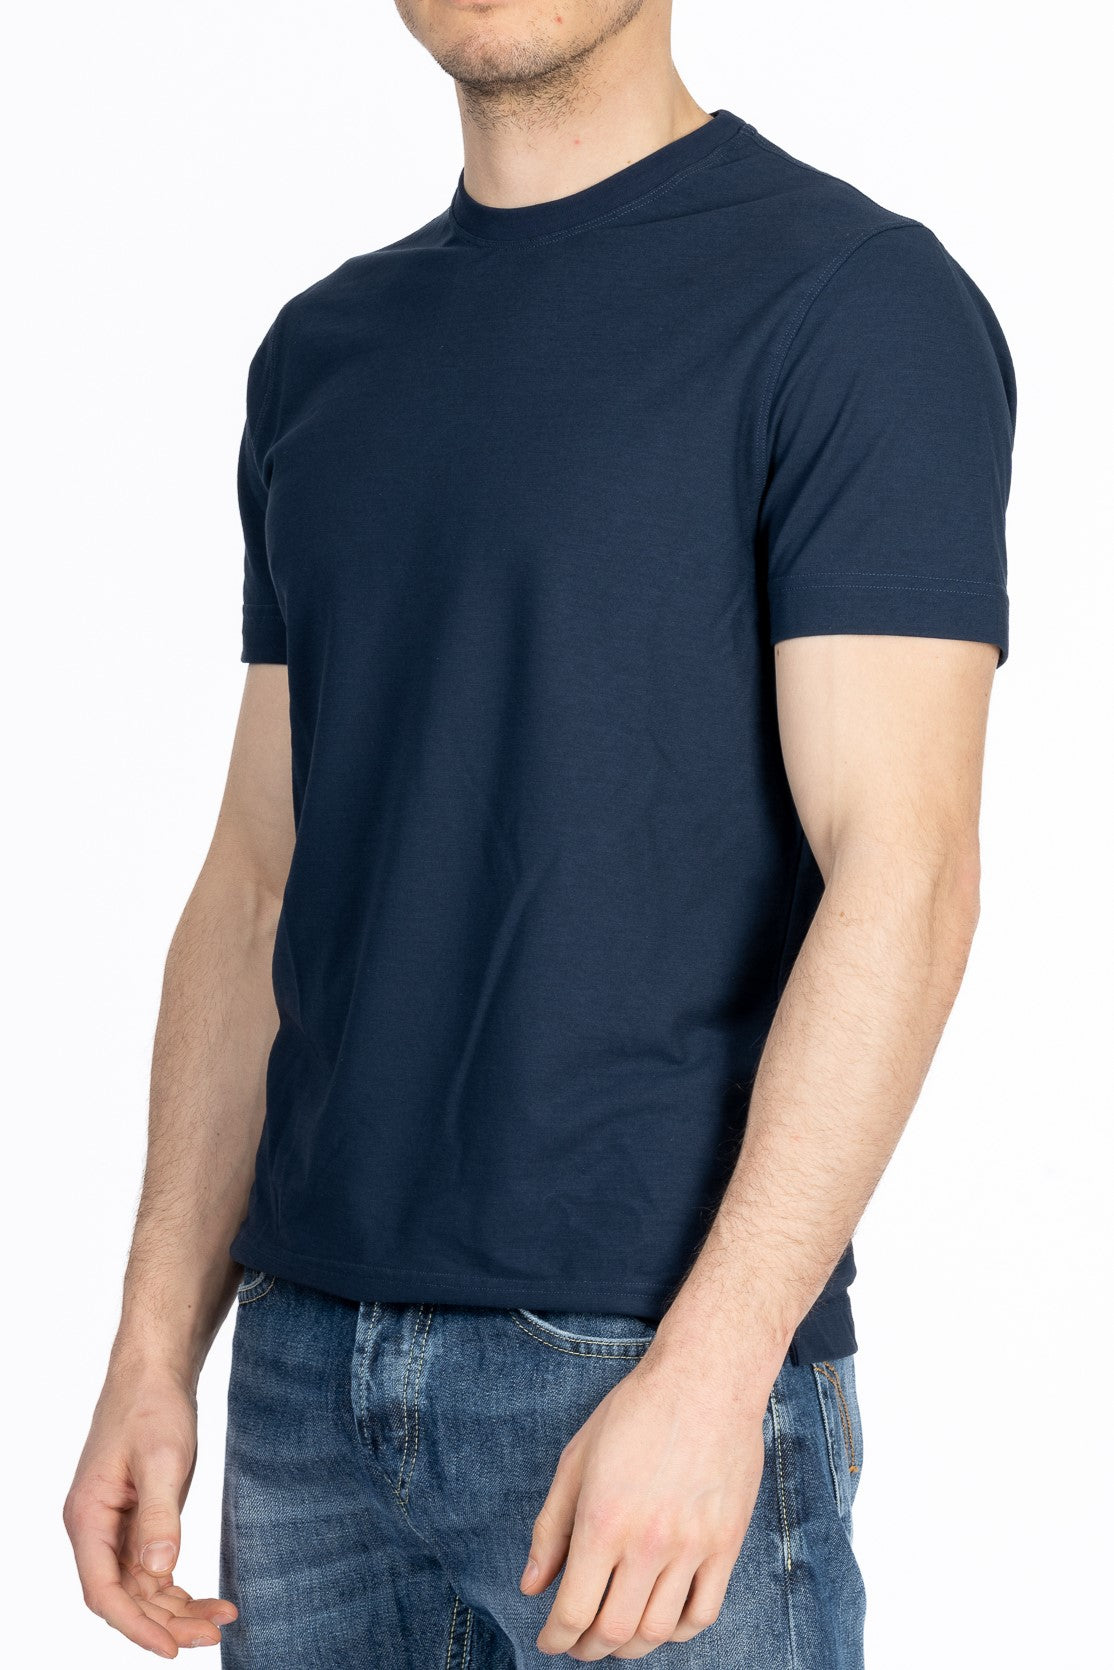 Zanone T-shirt Ice Cotton Blu Scuro Uomo-1